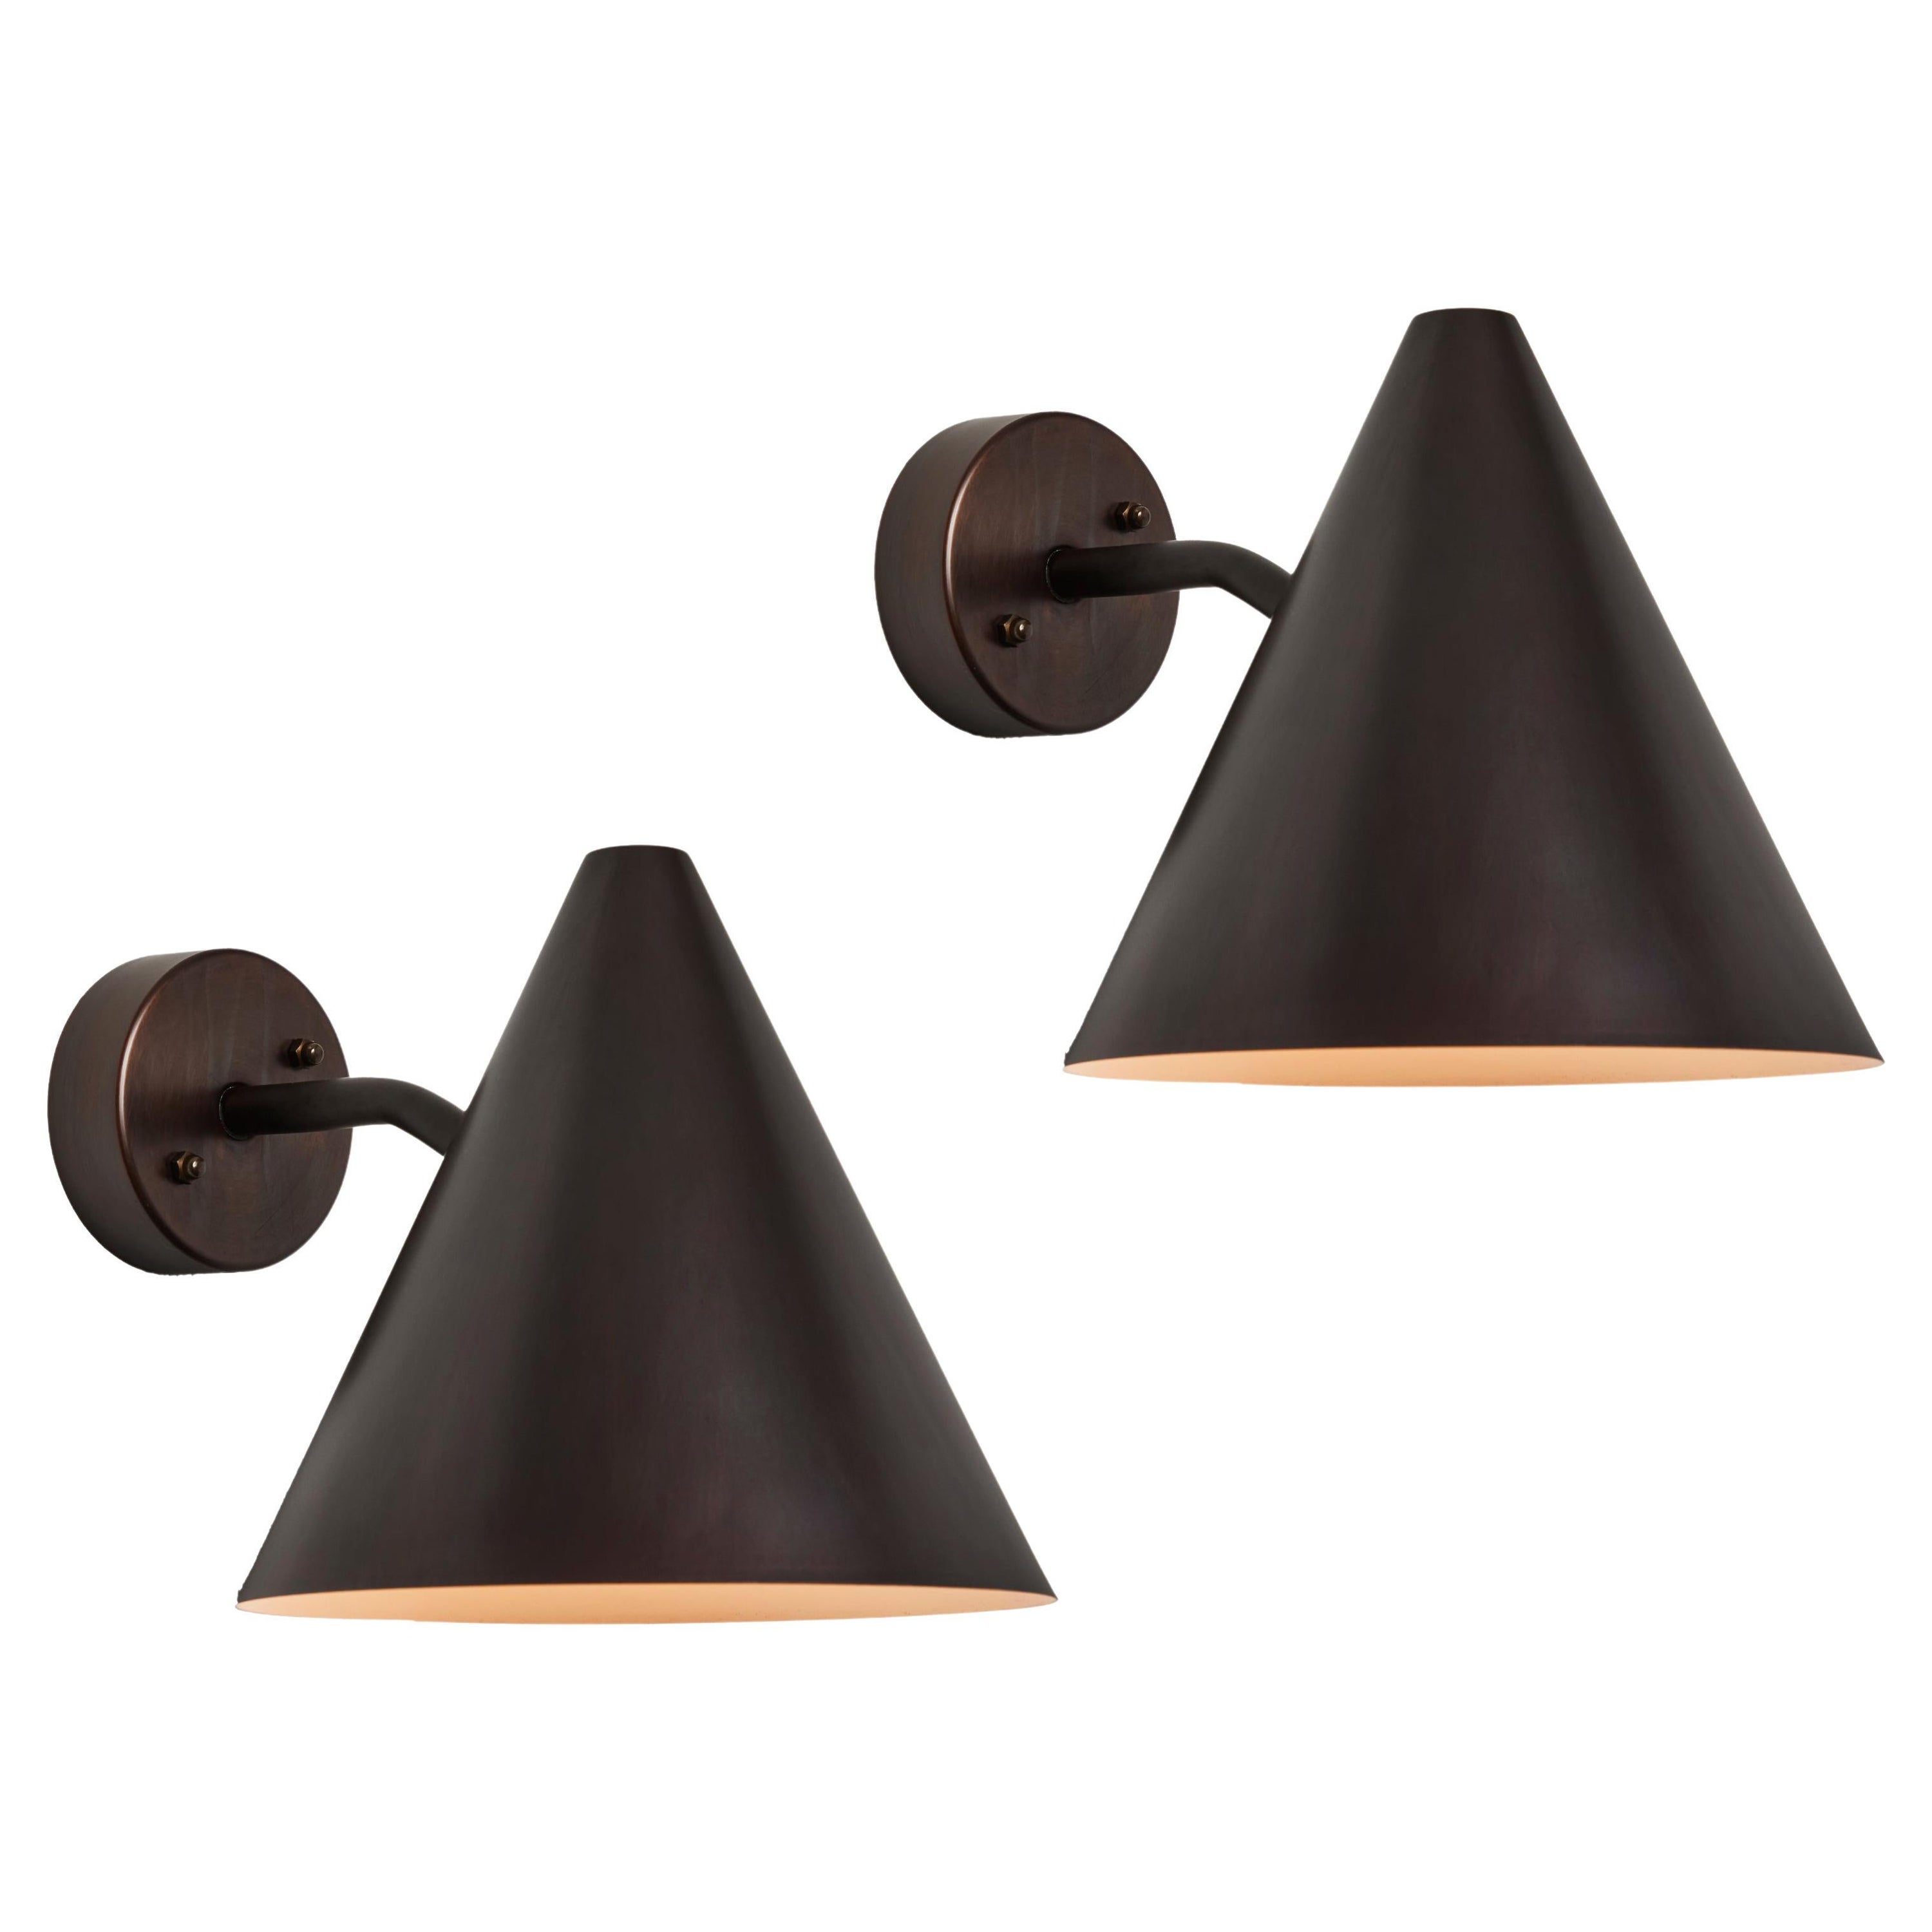 Pareja de lámparas de exterior Hans-Agne Jakobsson "Tratten" patinadas marrón oscuro